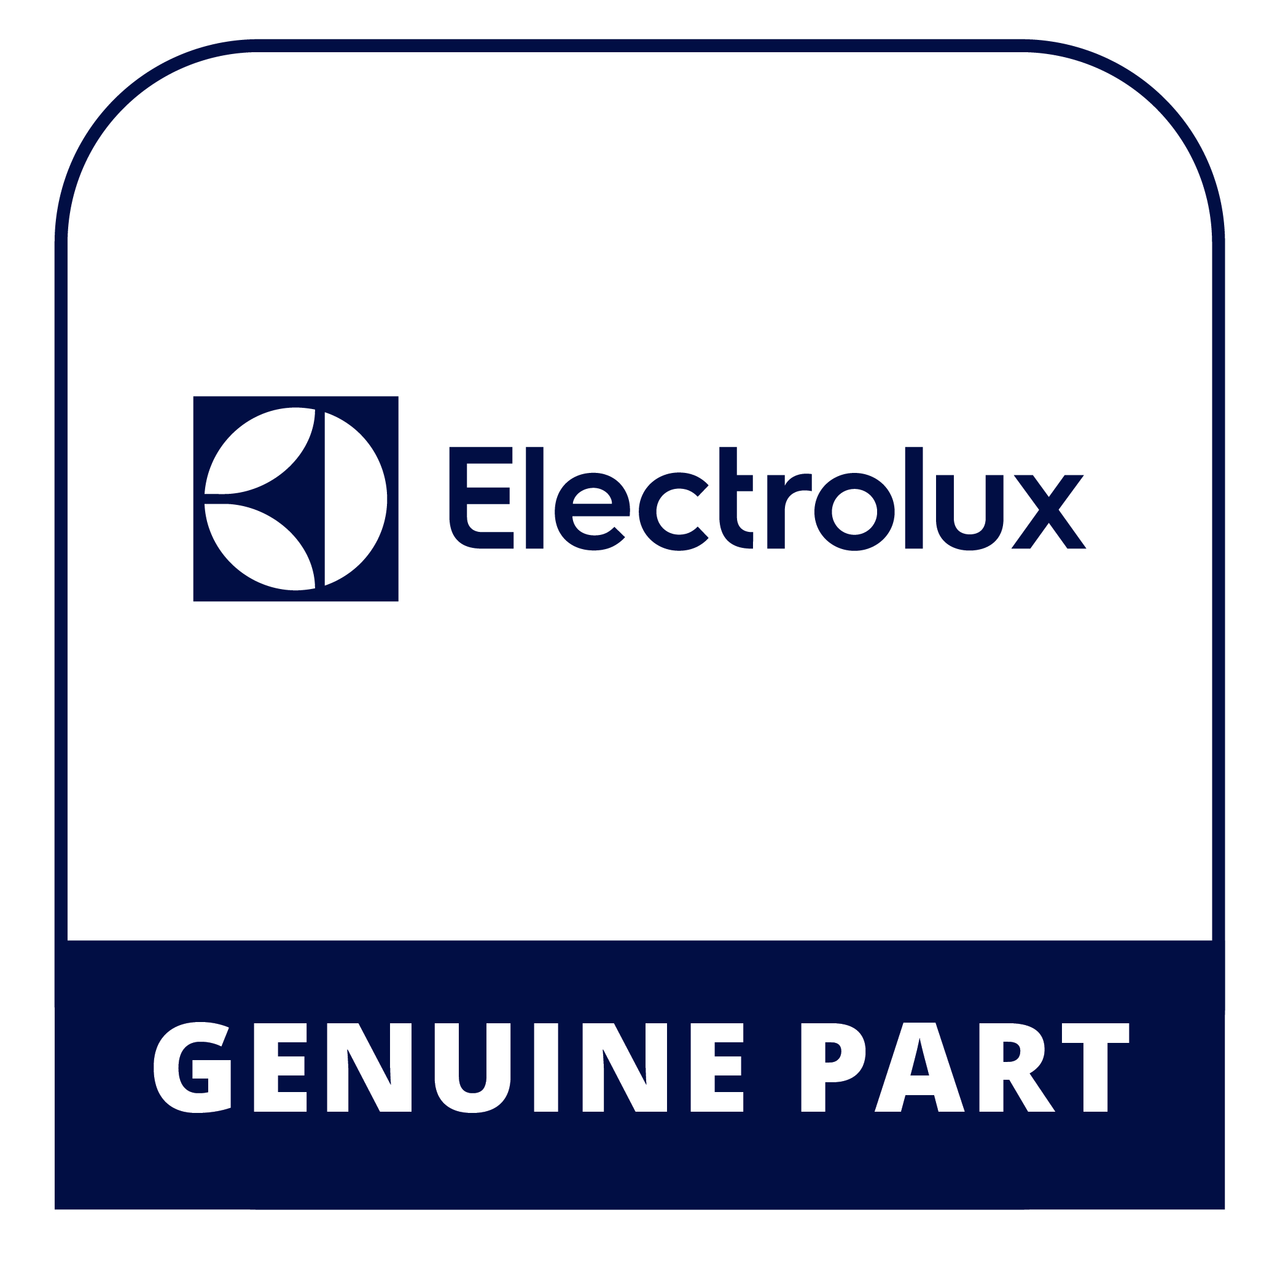 Frigidaire - Electrolux 5304524854 Slide Assembly - Genuine Electrolux Part